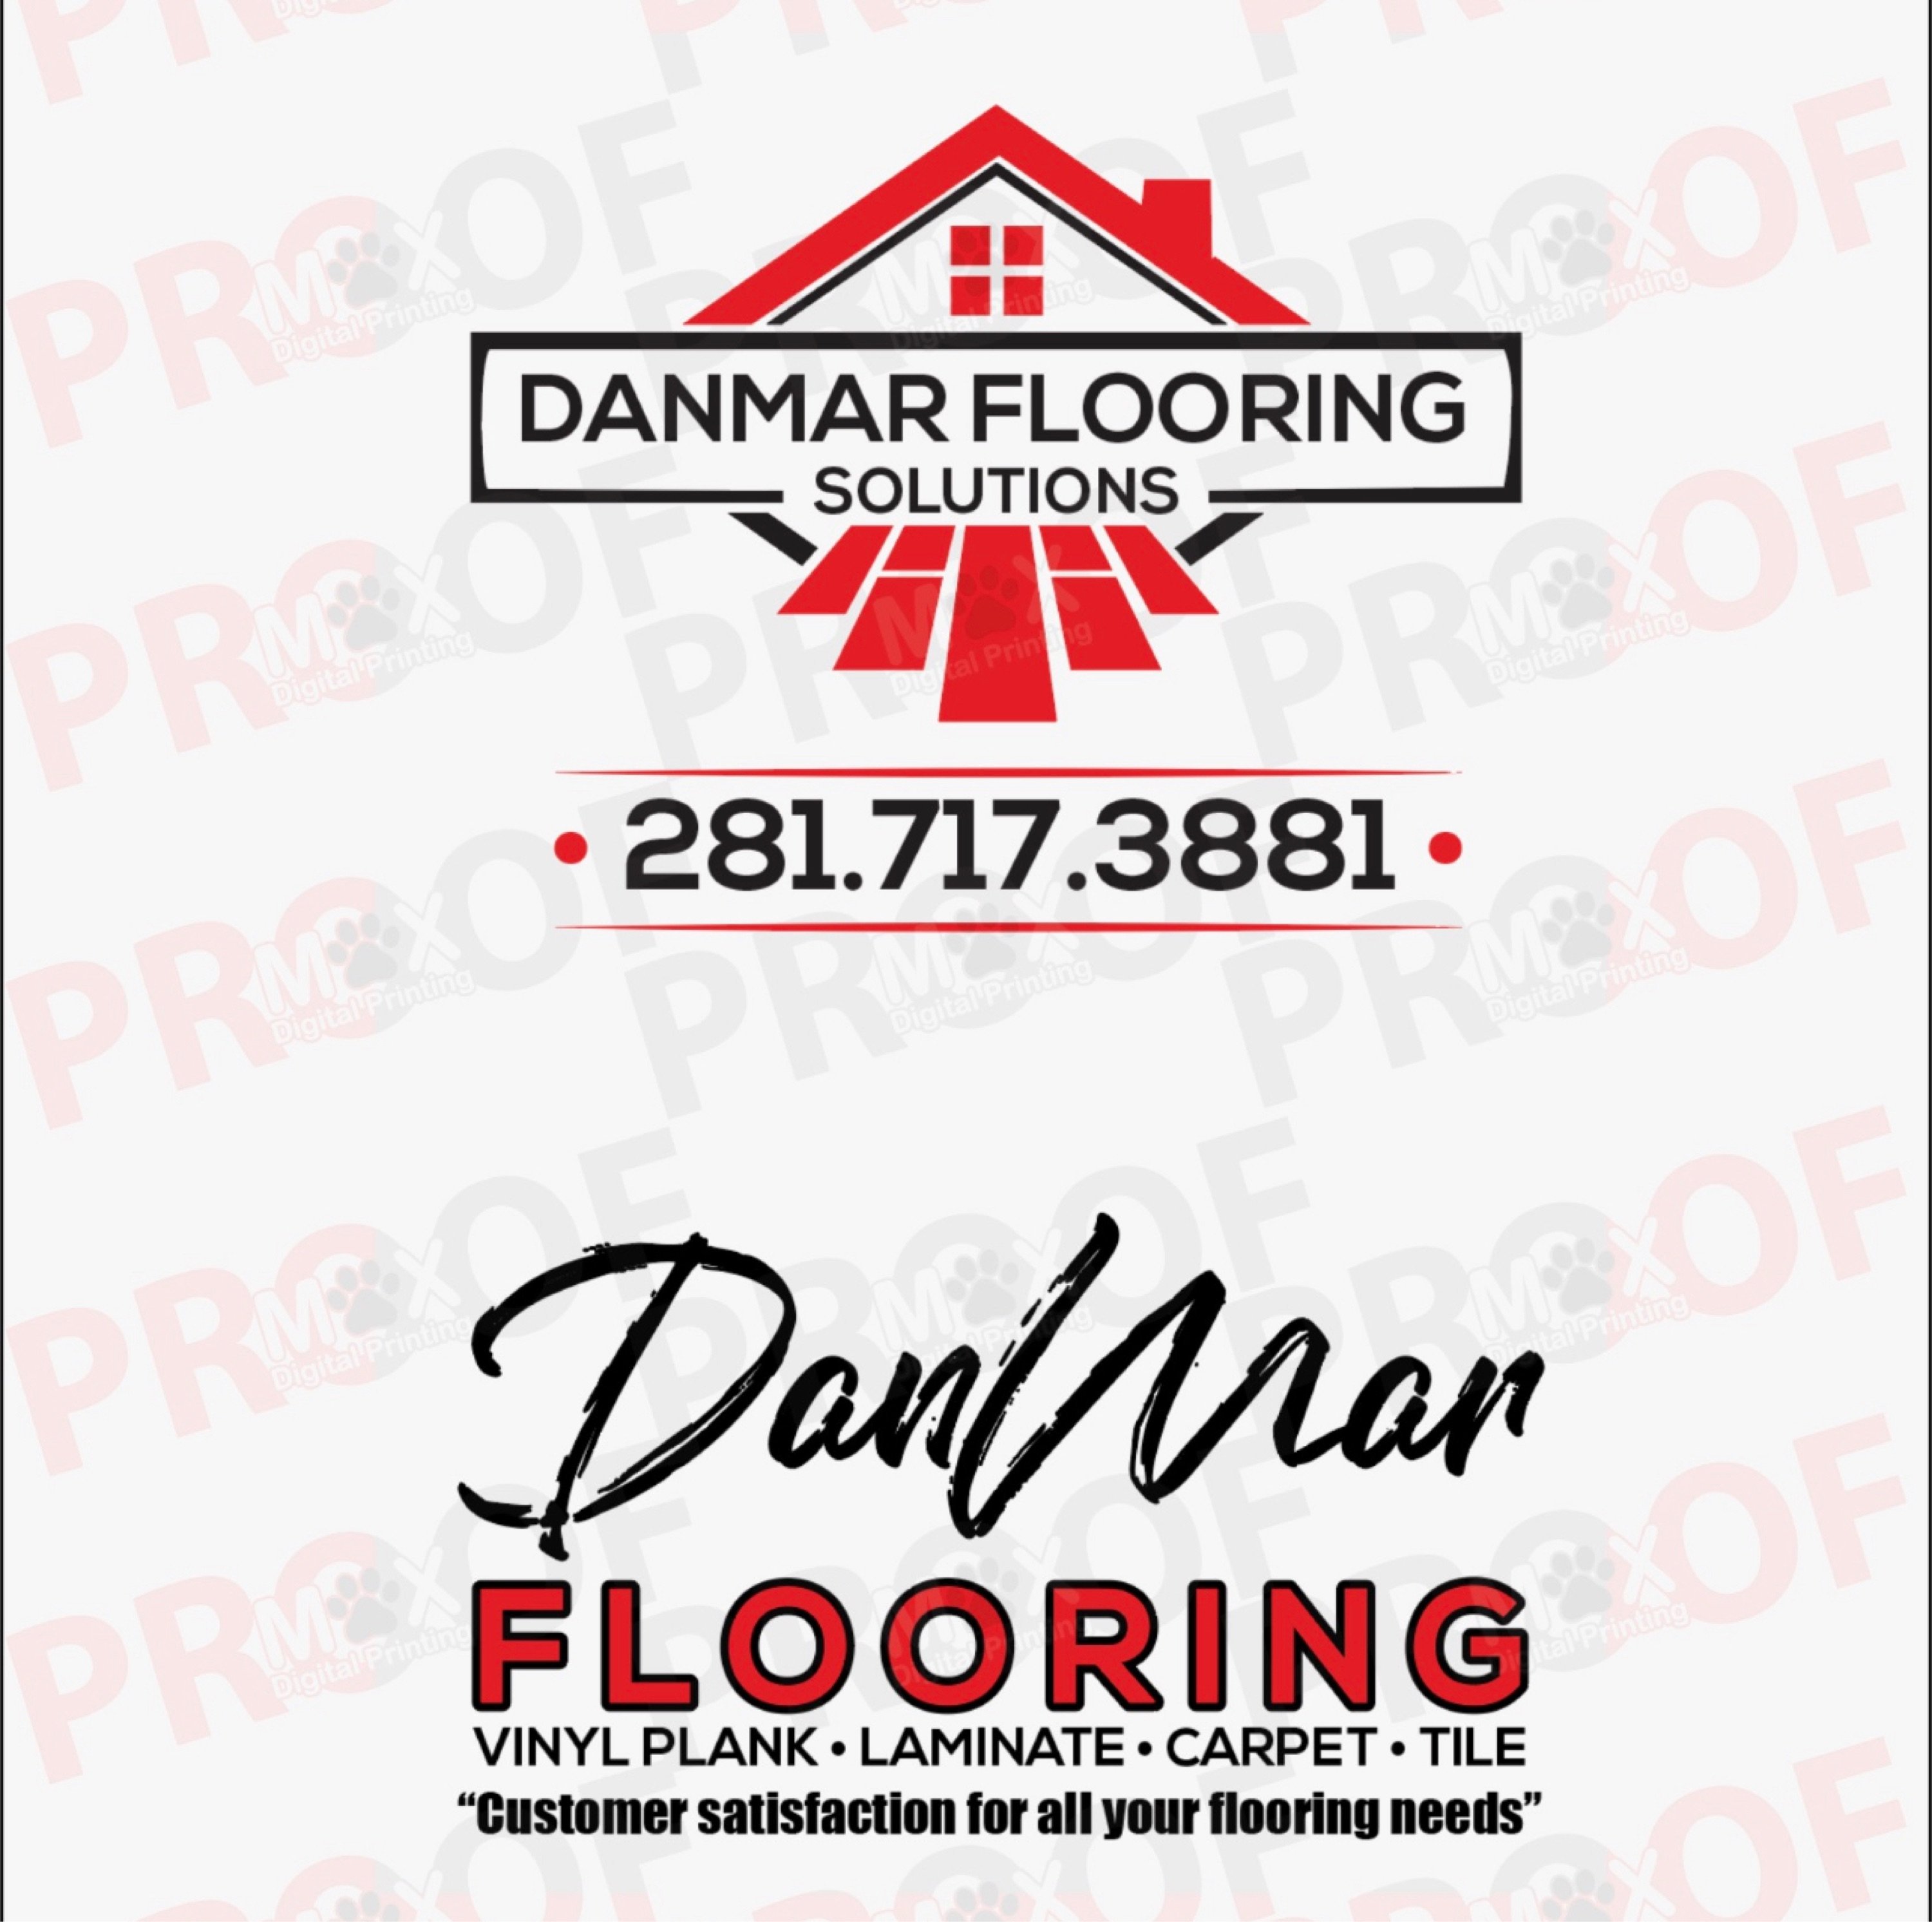 Danmar Flooring Logo